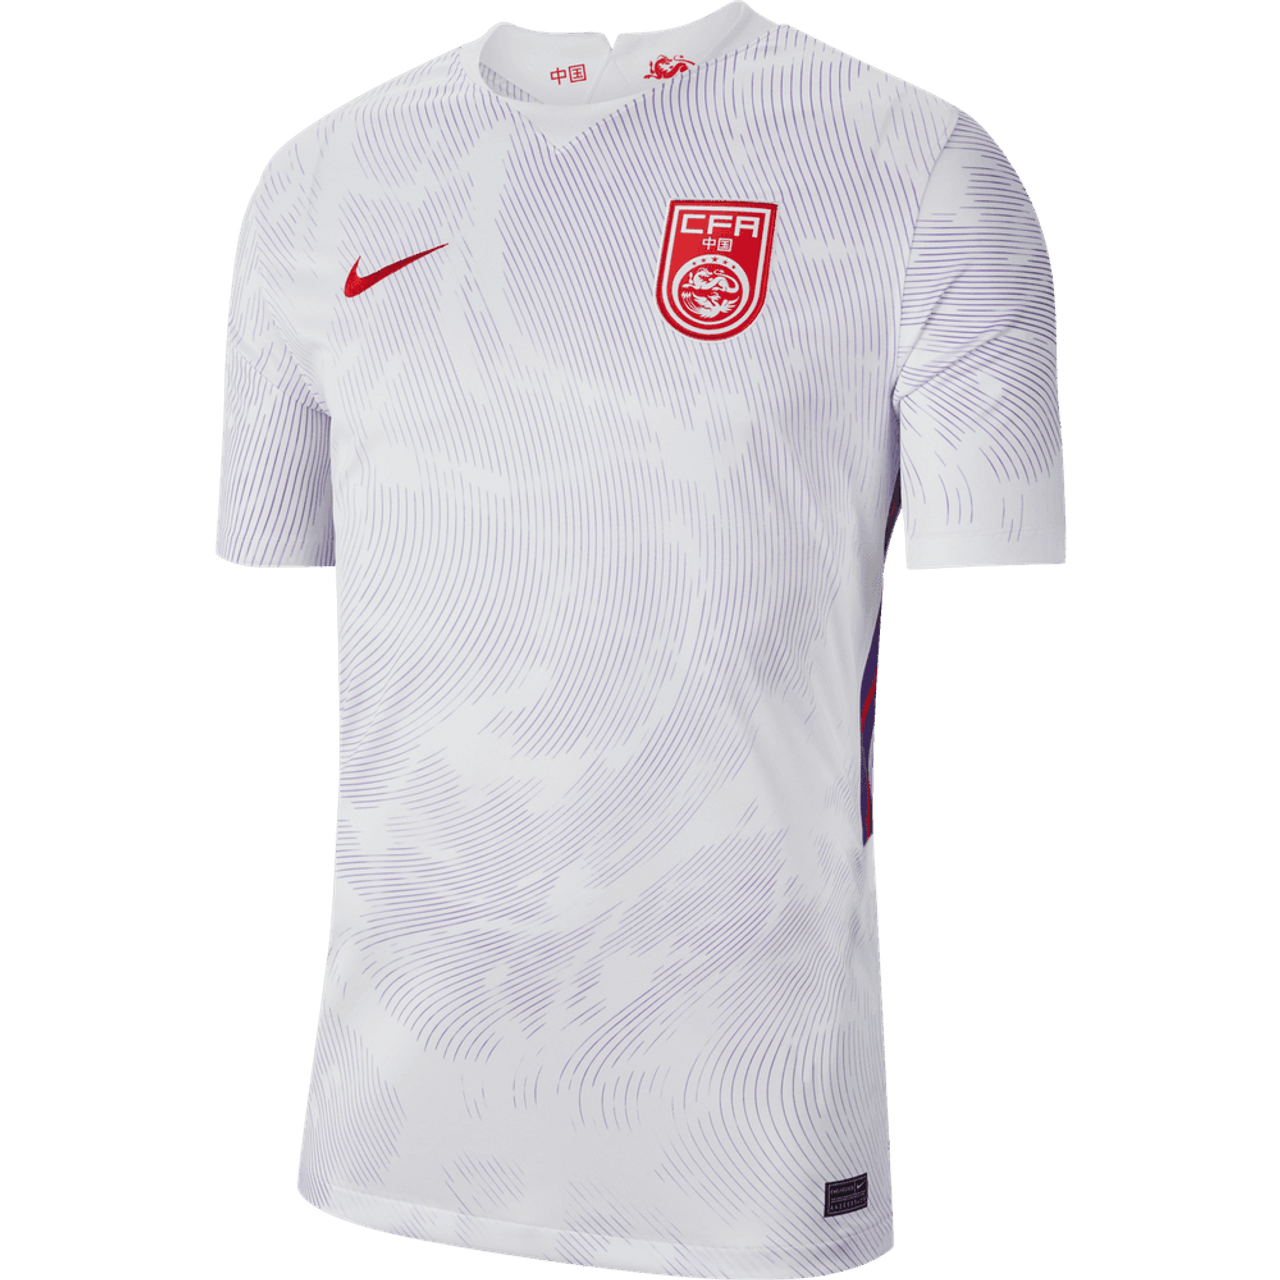 China 2020/21 Nike Home and Away Kits - FOOTBALL FASHION